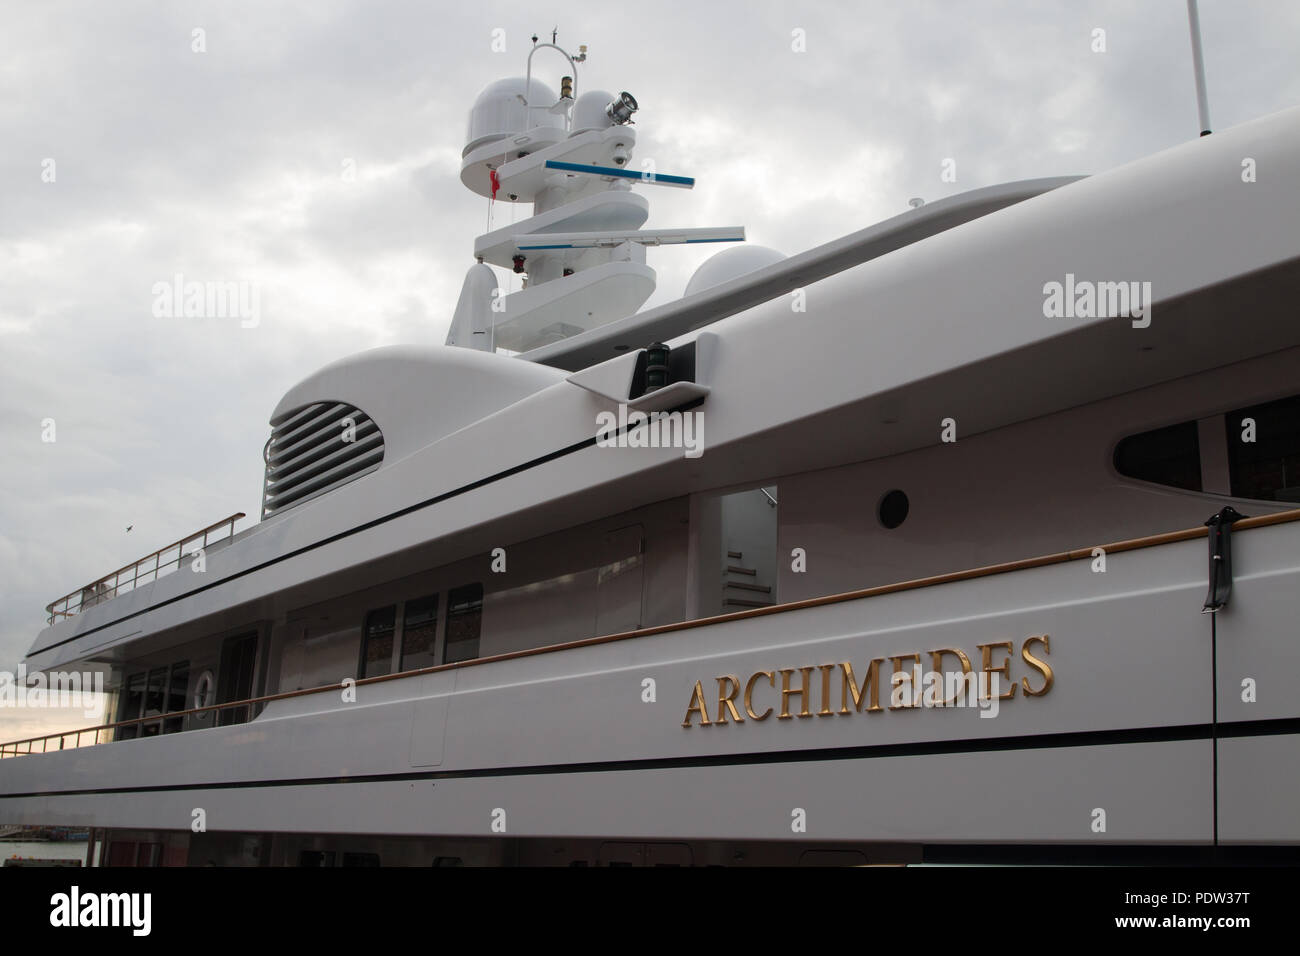 ARCHIMEDES: James Simons' Yacht, Bristol Stock Photo